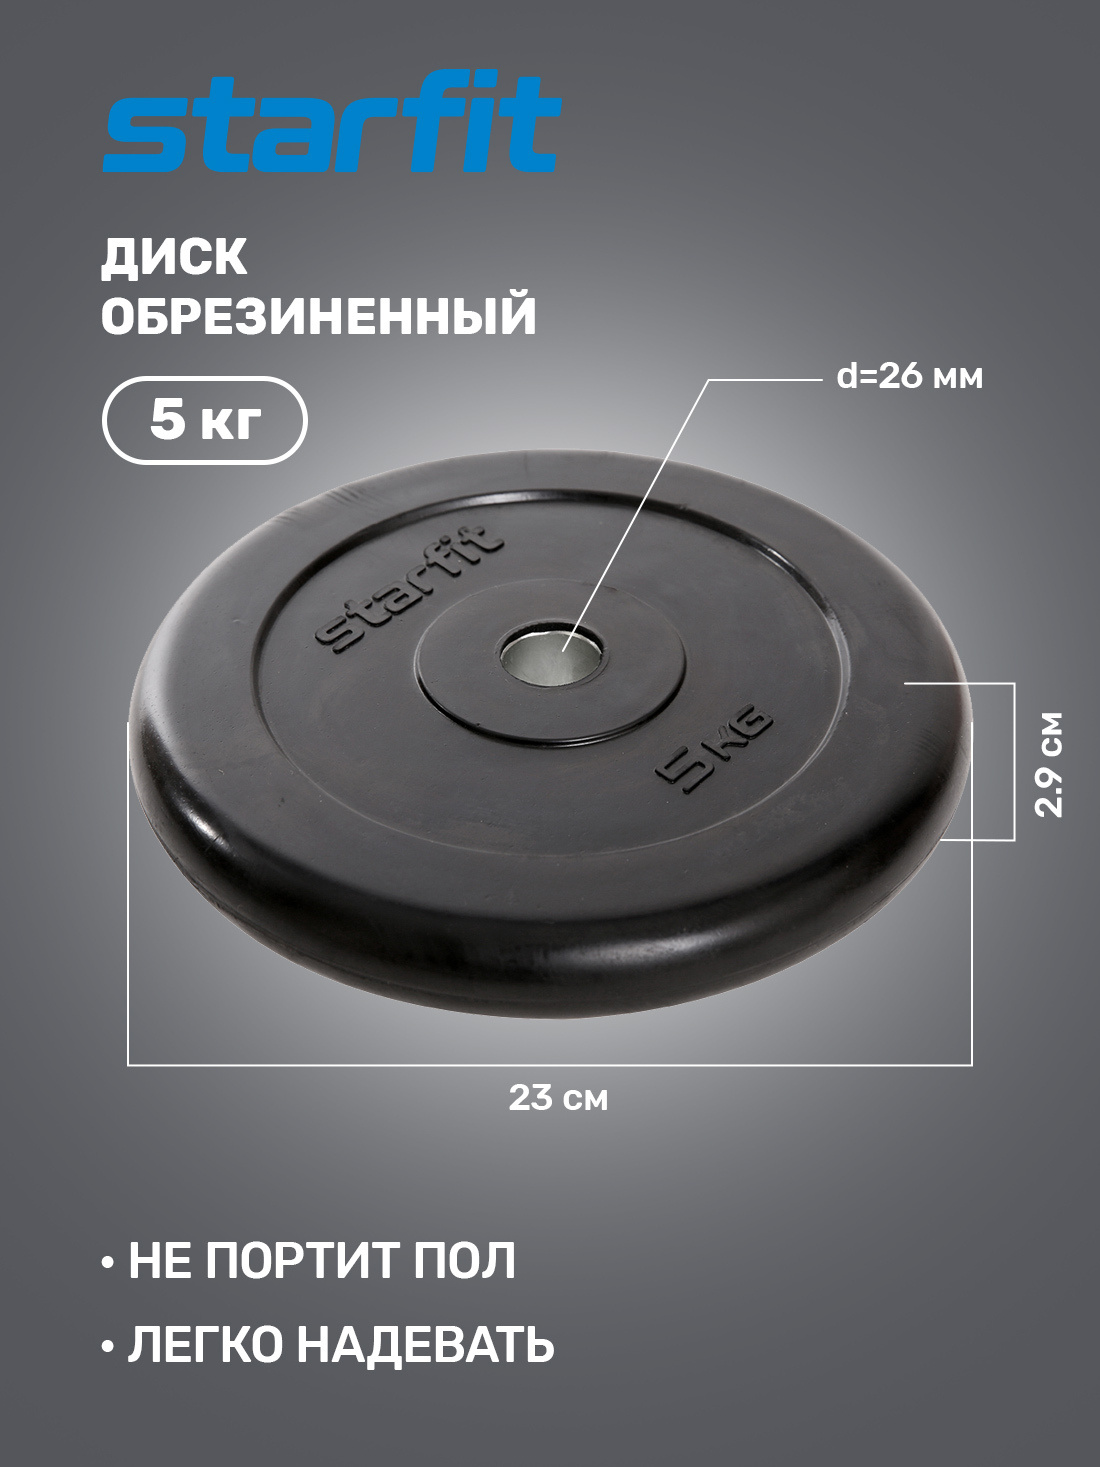 Диск для грифа STARFIT Core BB-202 5 кг, d26 мм - Код товара: 300625125